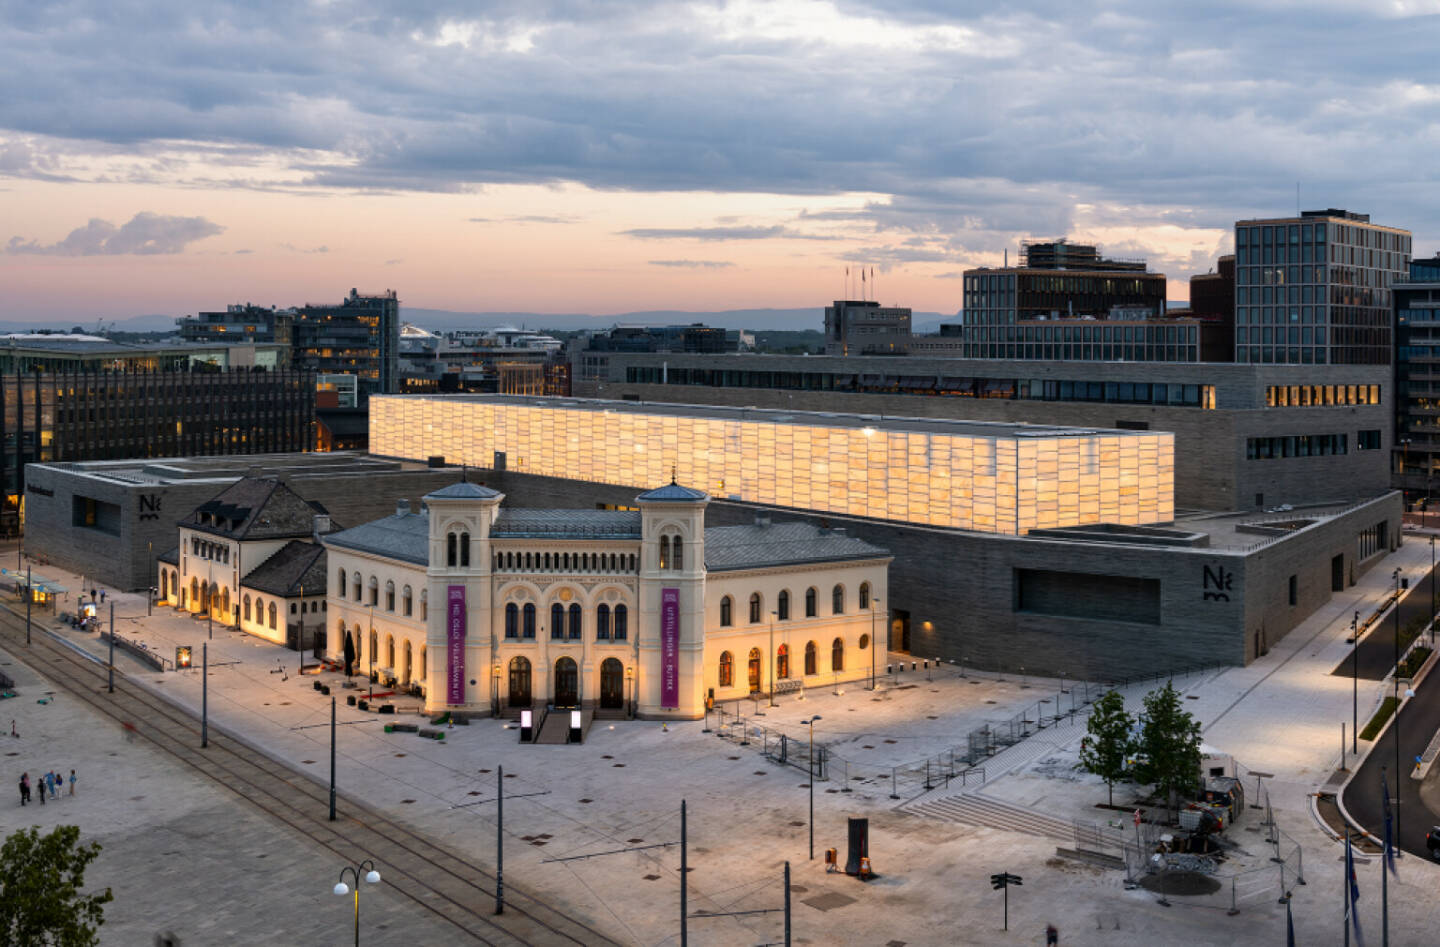 Neues Nationalmuseum in Oslo
Zumtobel Group beleuchtet neues Nationalmuseum in Oslo, Fotoquelle: Zumtobel